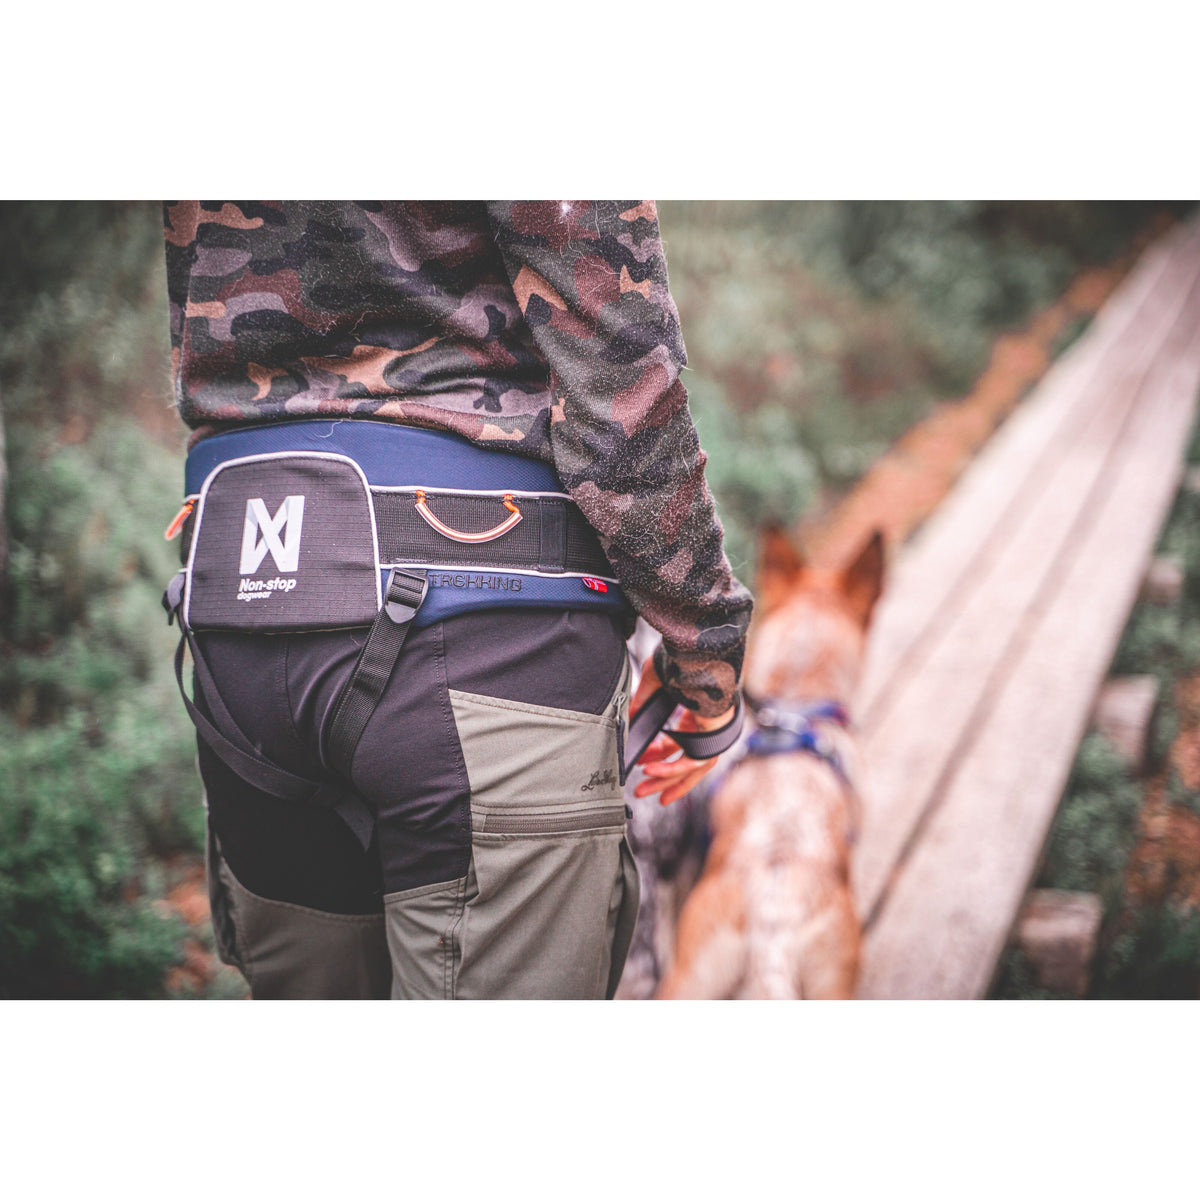 Wandergurt Trekking Belt - blau - athleticdog